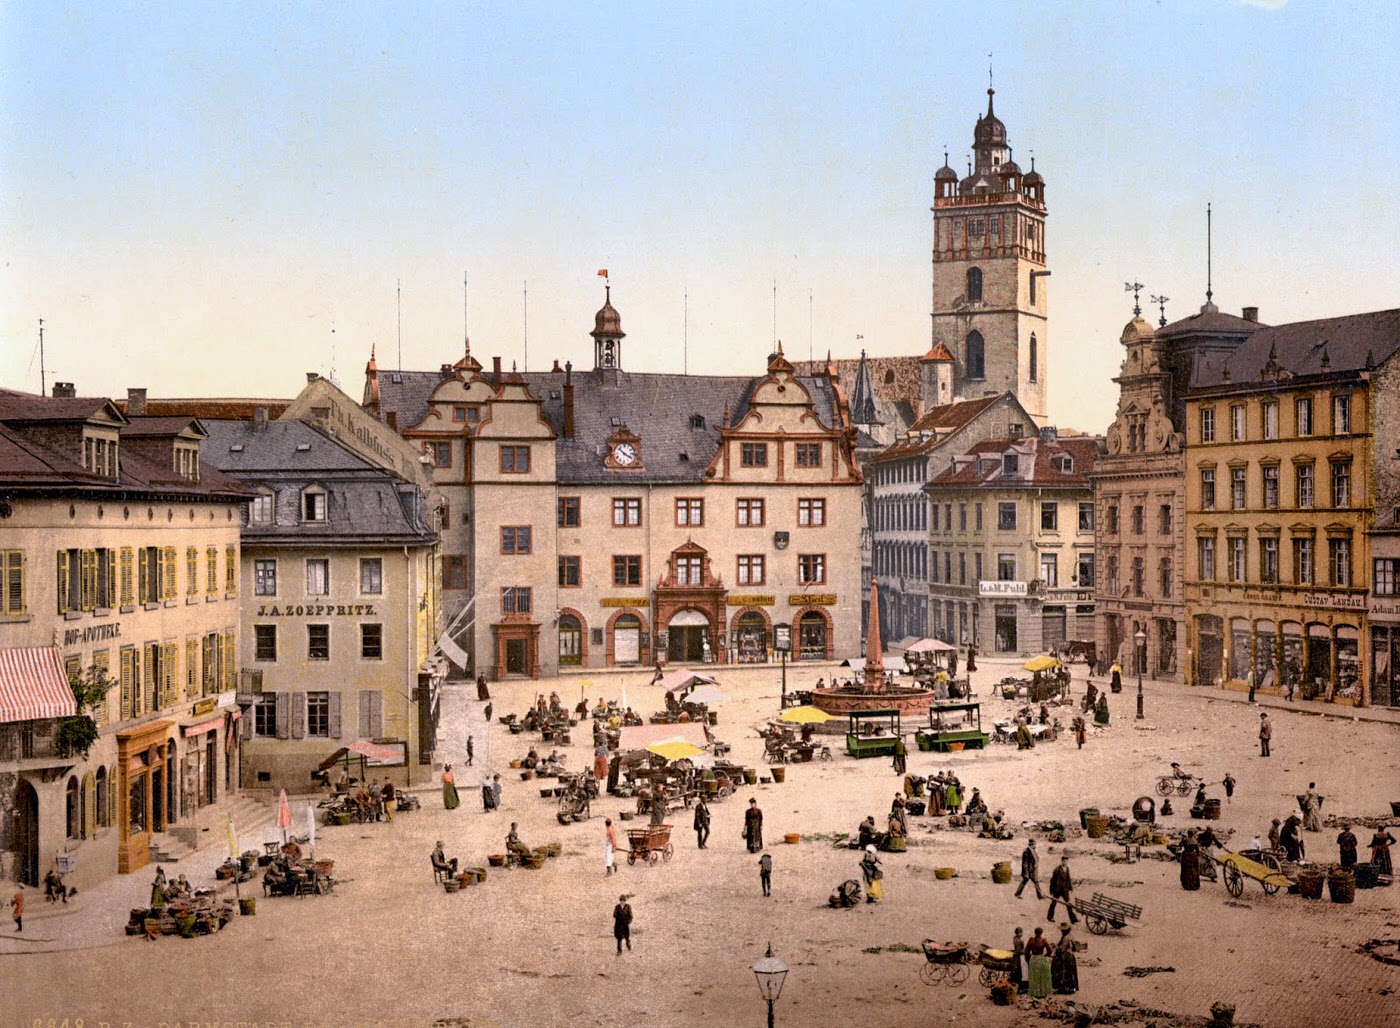 Market place, Darmstadt, the Rhine, Germany, 1890